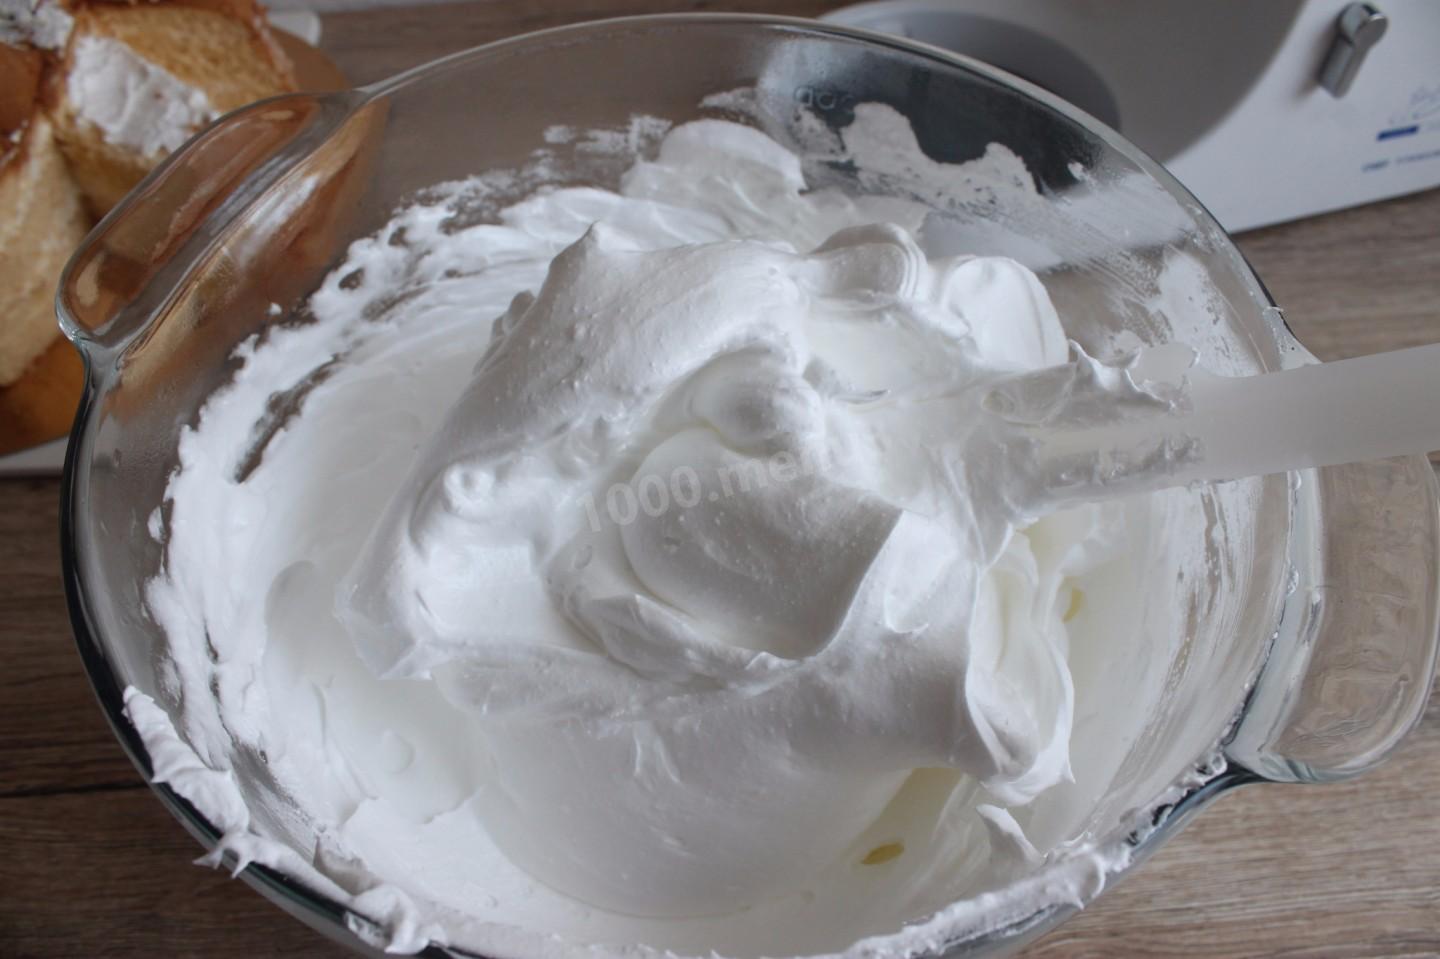 Особенности белкового крема на торт